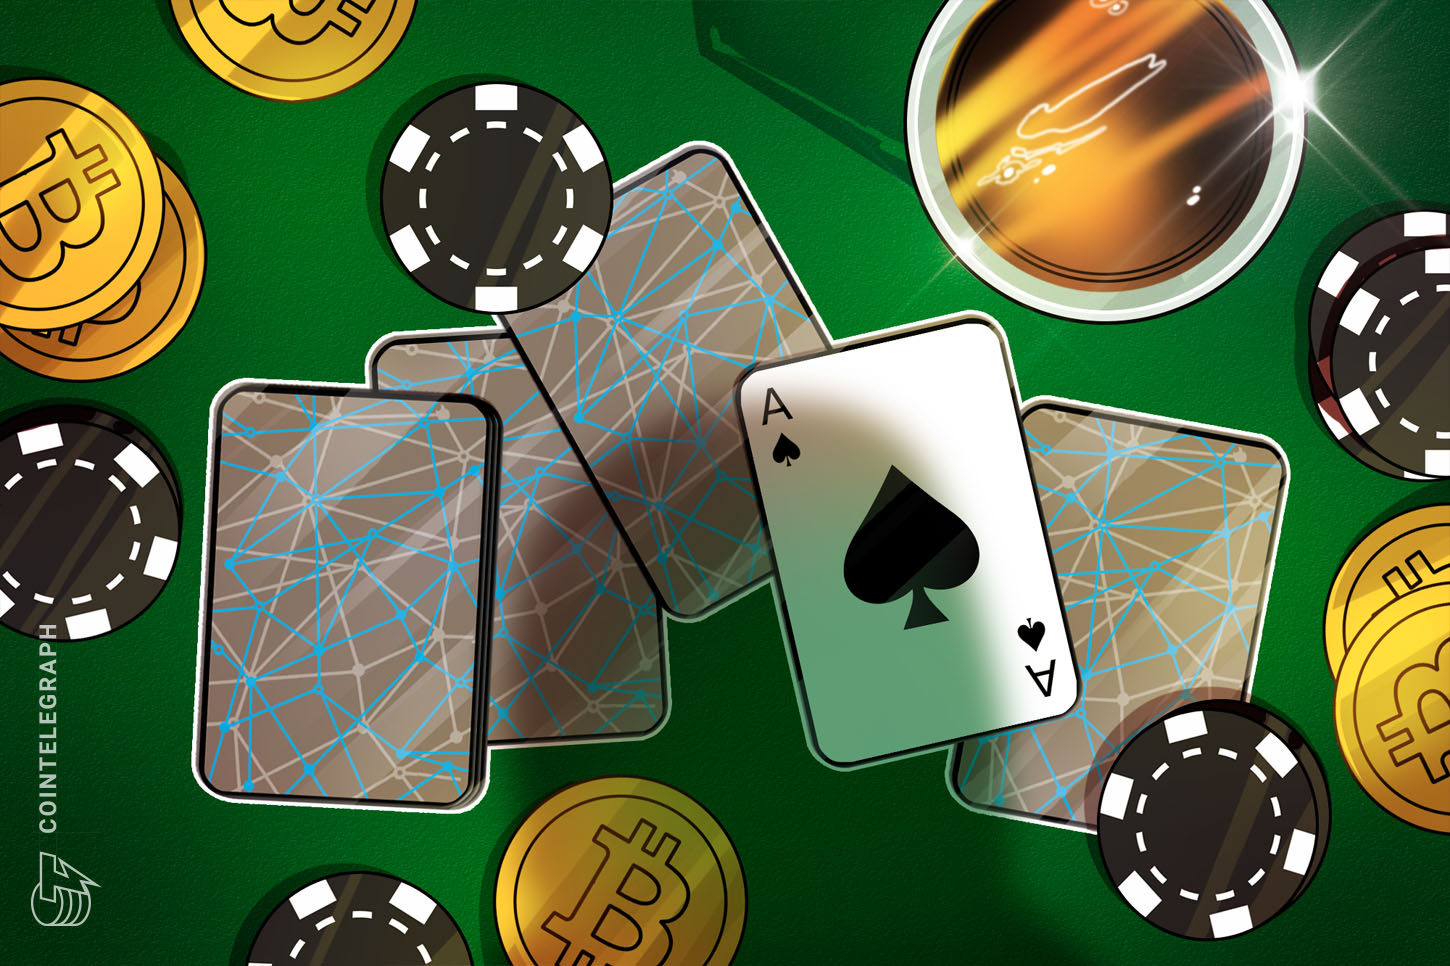 Jaringan poker sekarang memberikan '95% pembayaran 'dalam Bitcoin - sekitar $ 160 juta setiap bulan